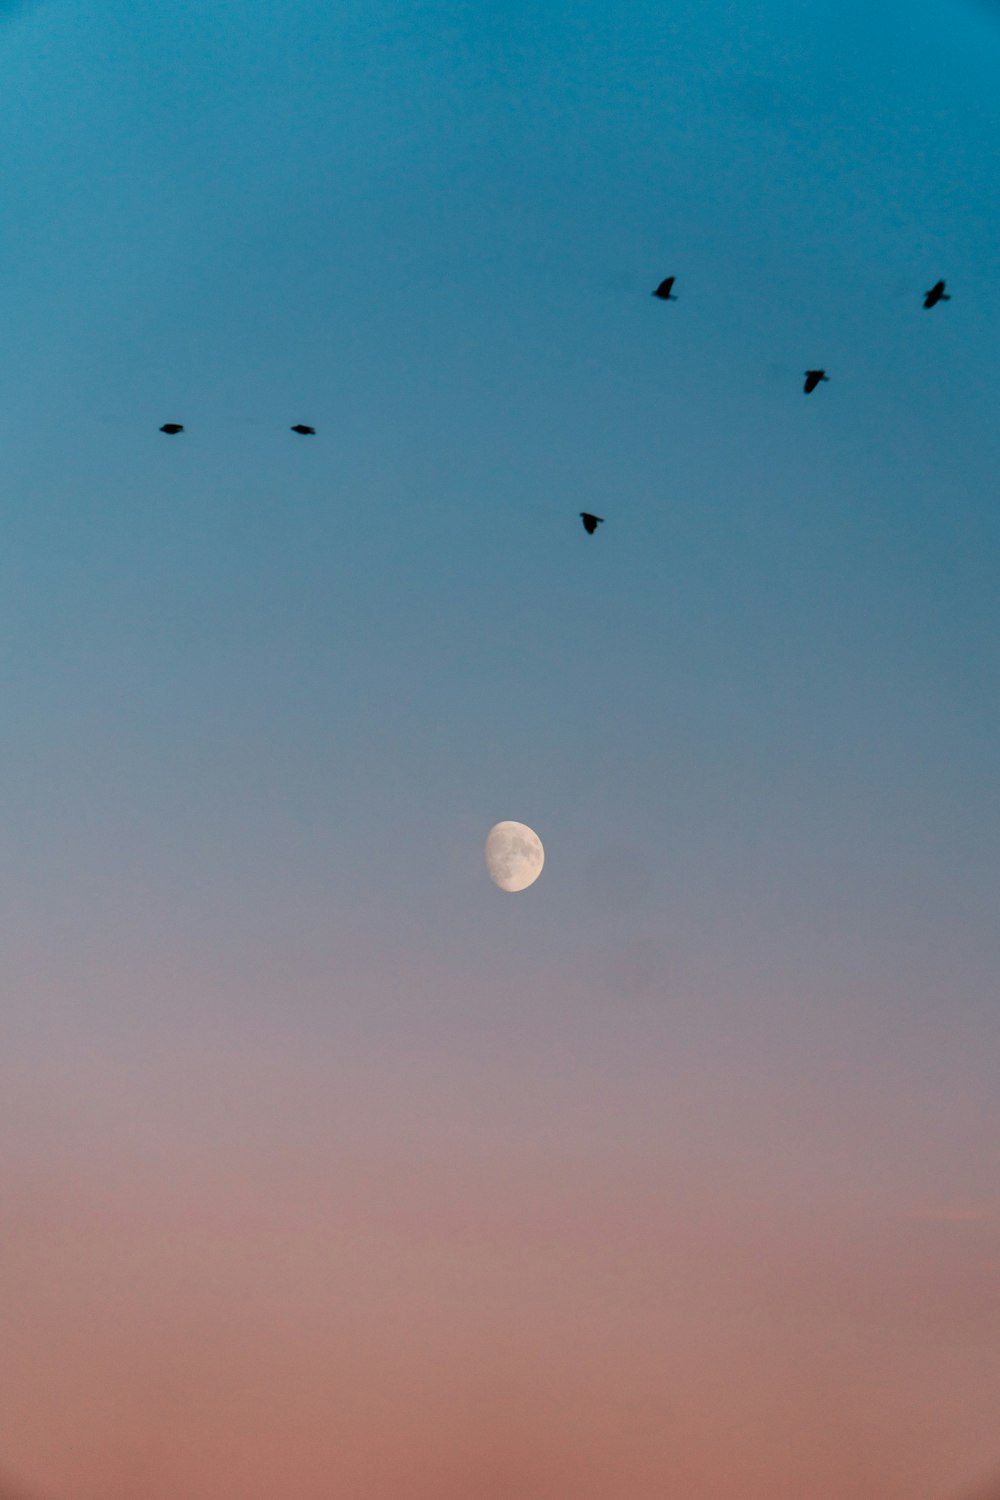 a flock of birds flying across a blue sky